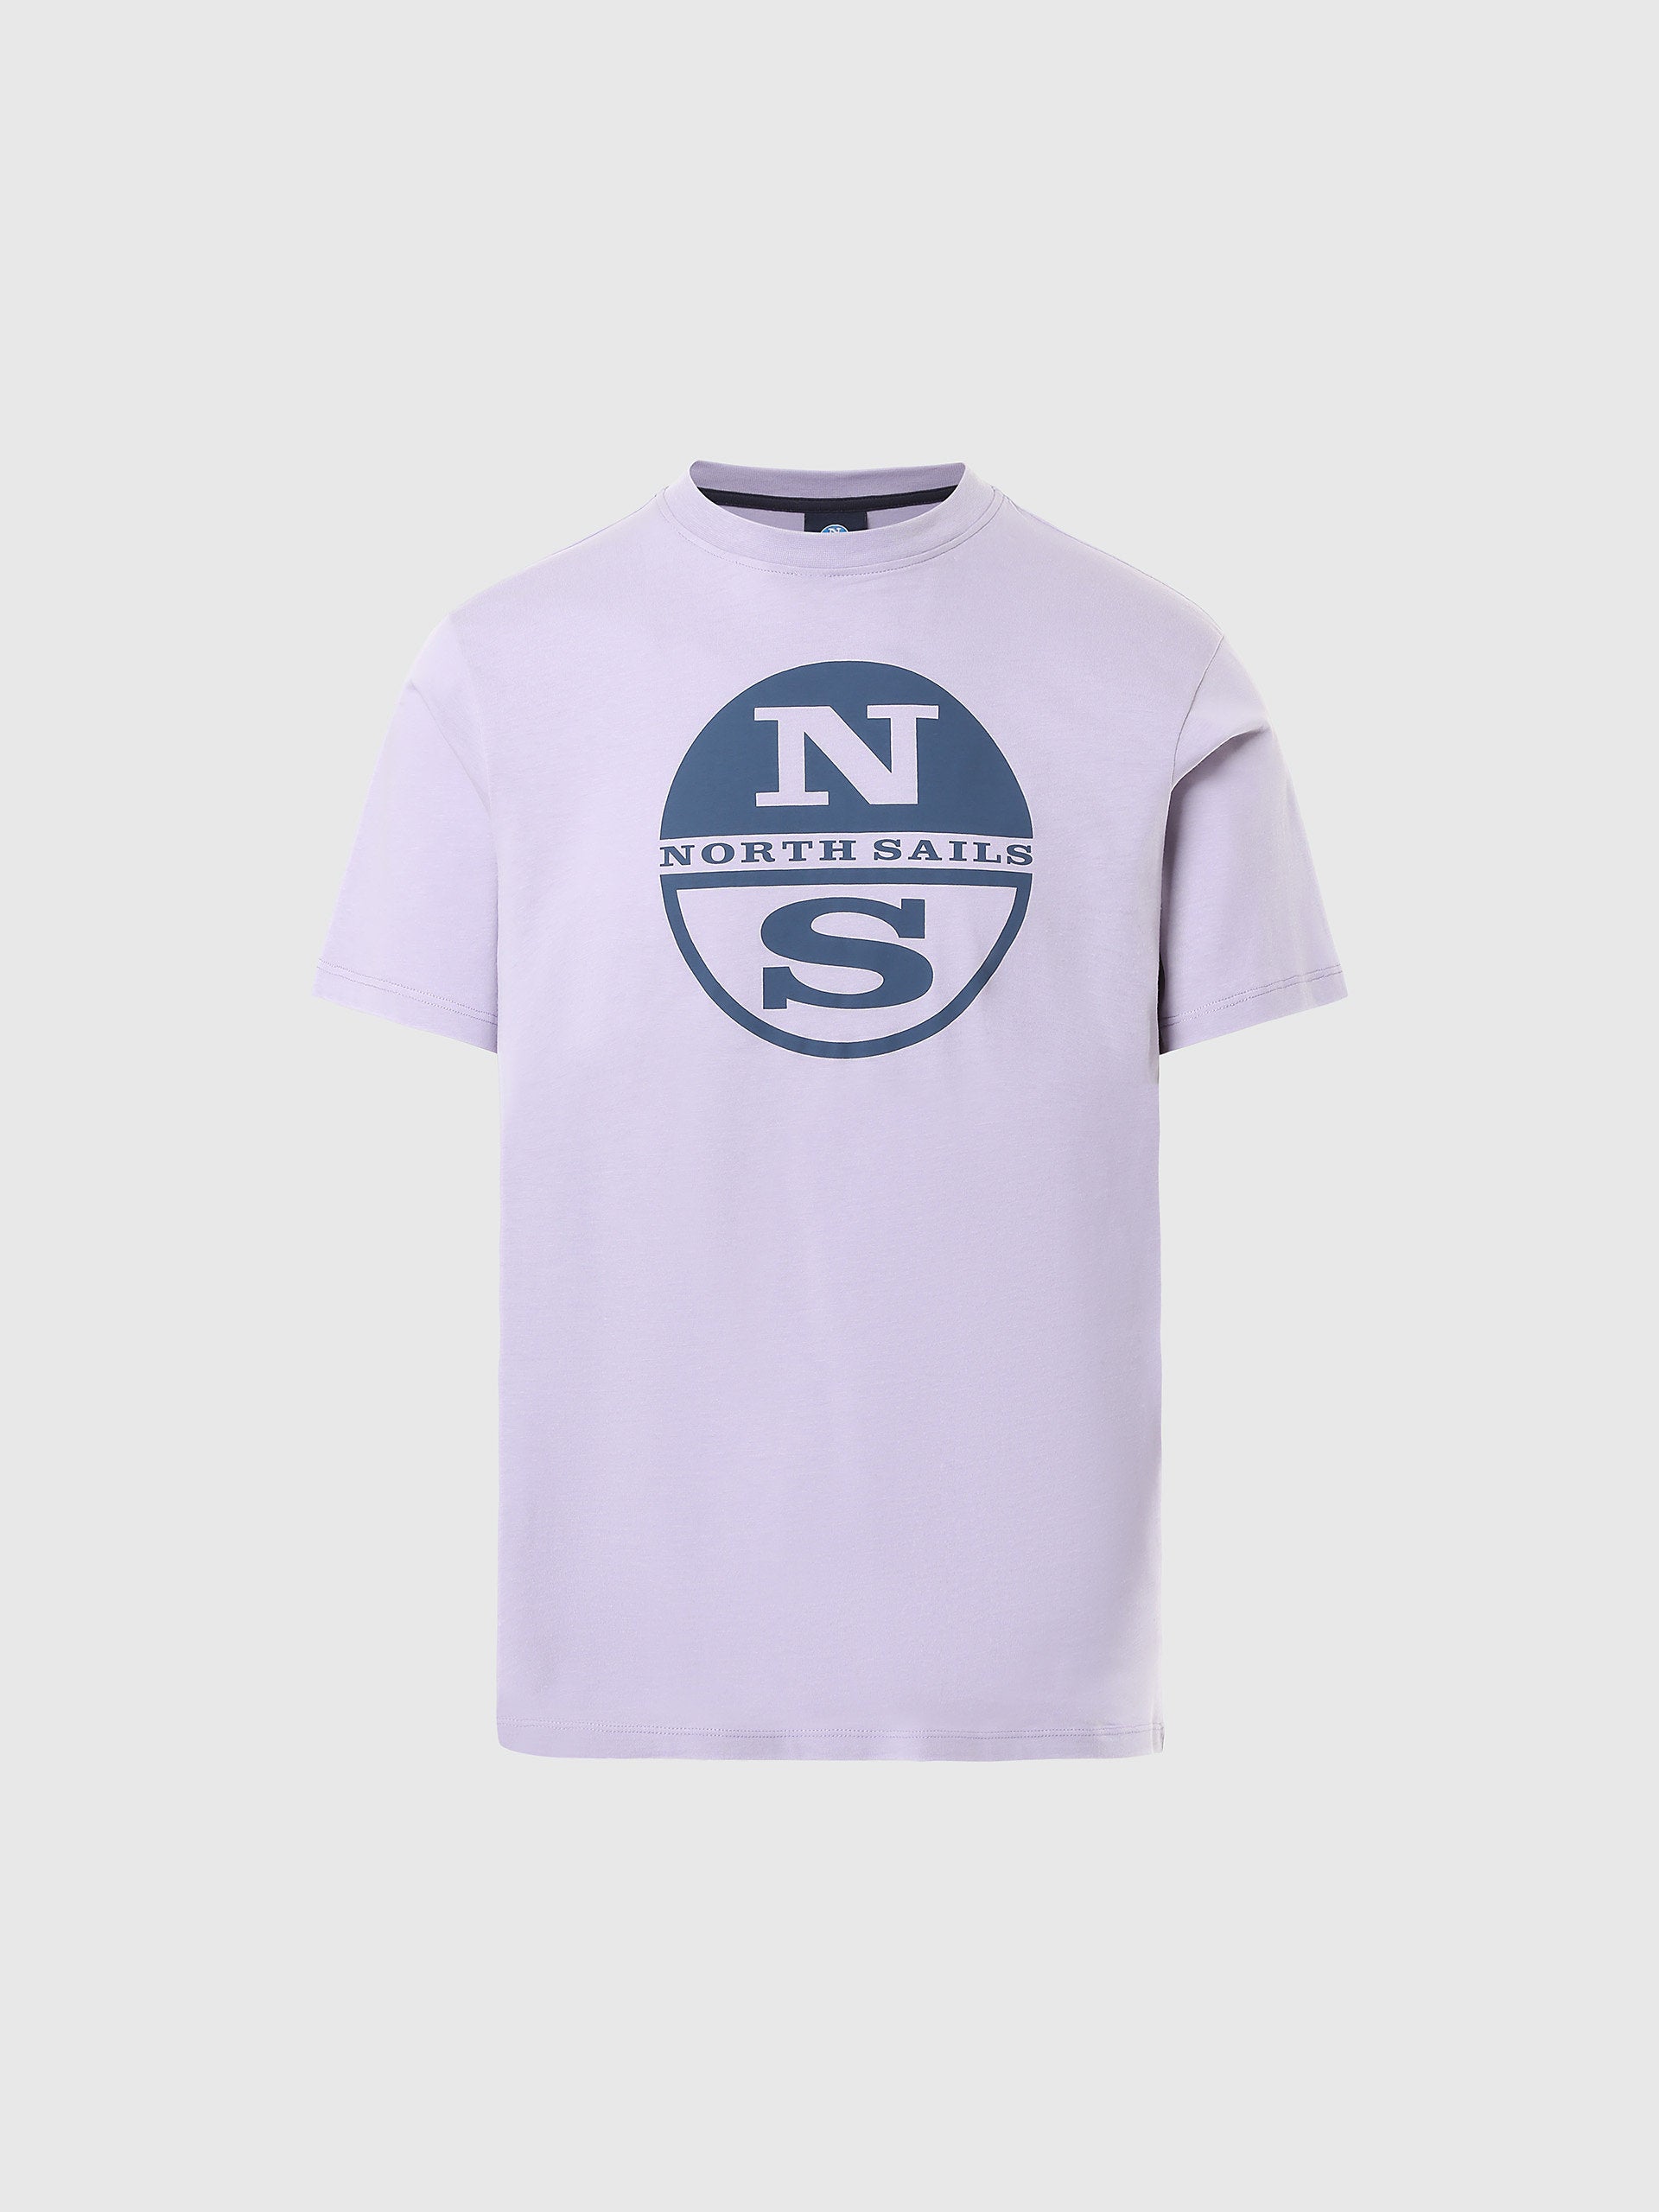 North Sails - T-shirt con stampa maxi logoNorth SailsDusty lilacS